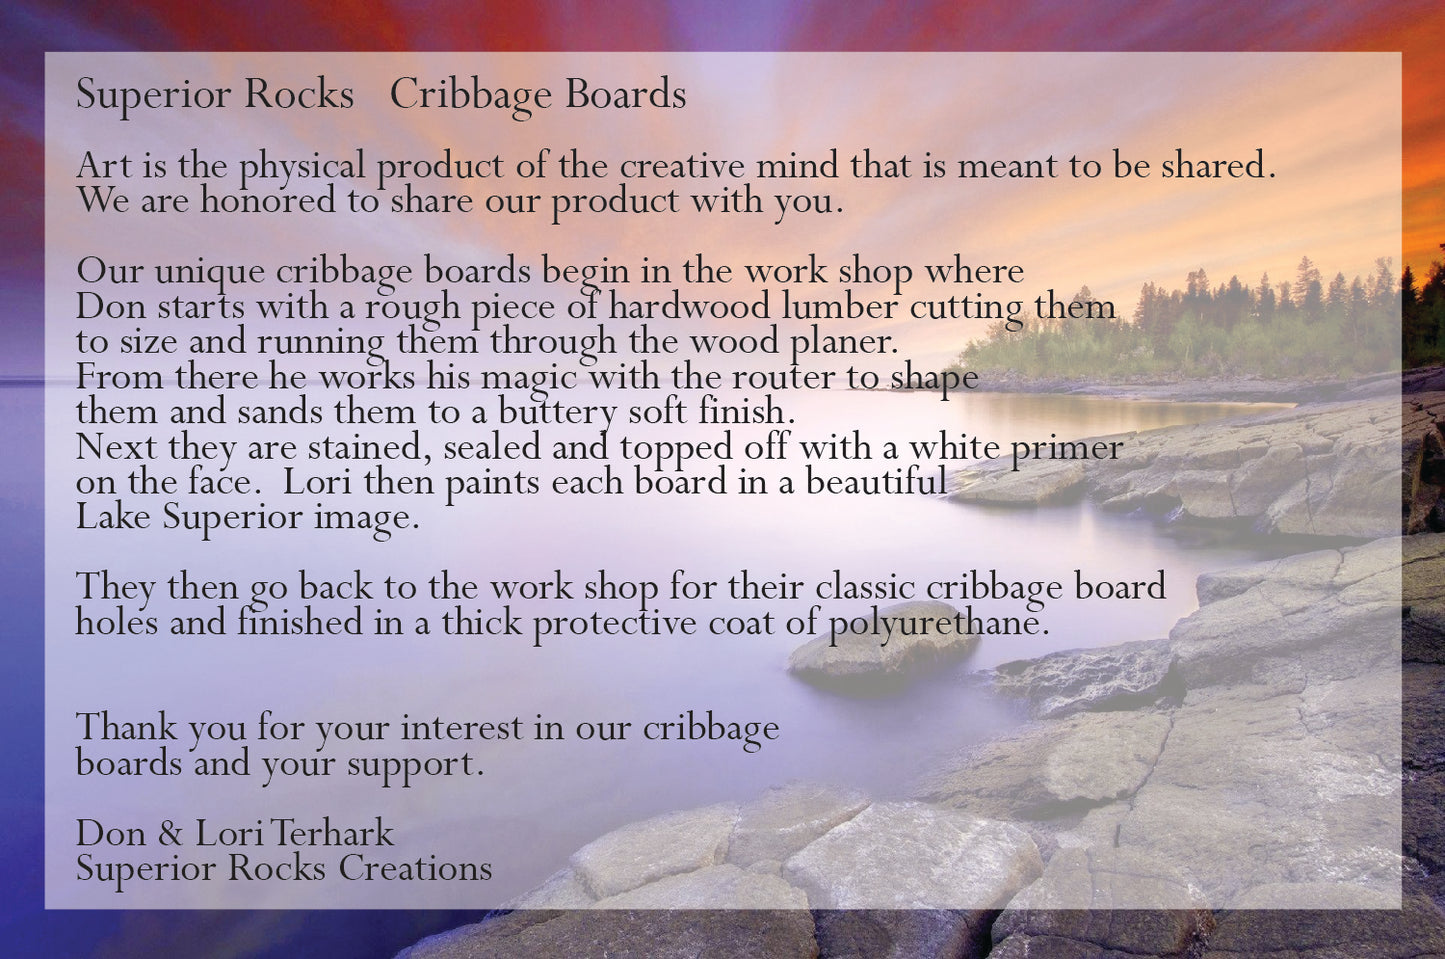 Pincushion Mountain - Cribbage Board by Lori and Don Terhark